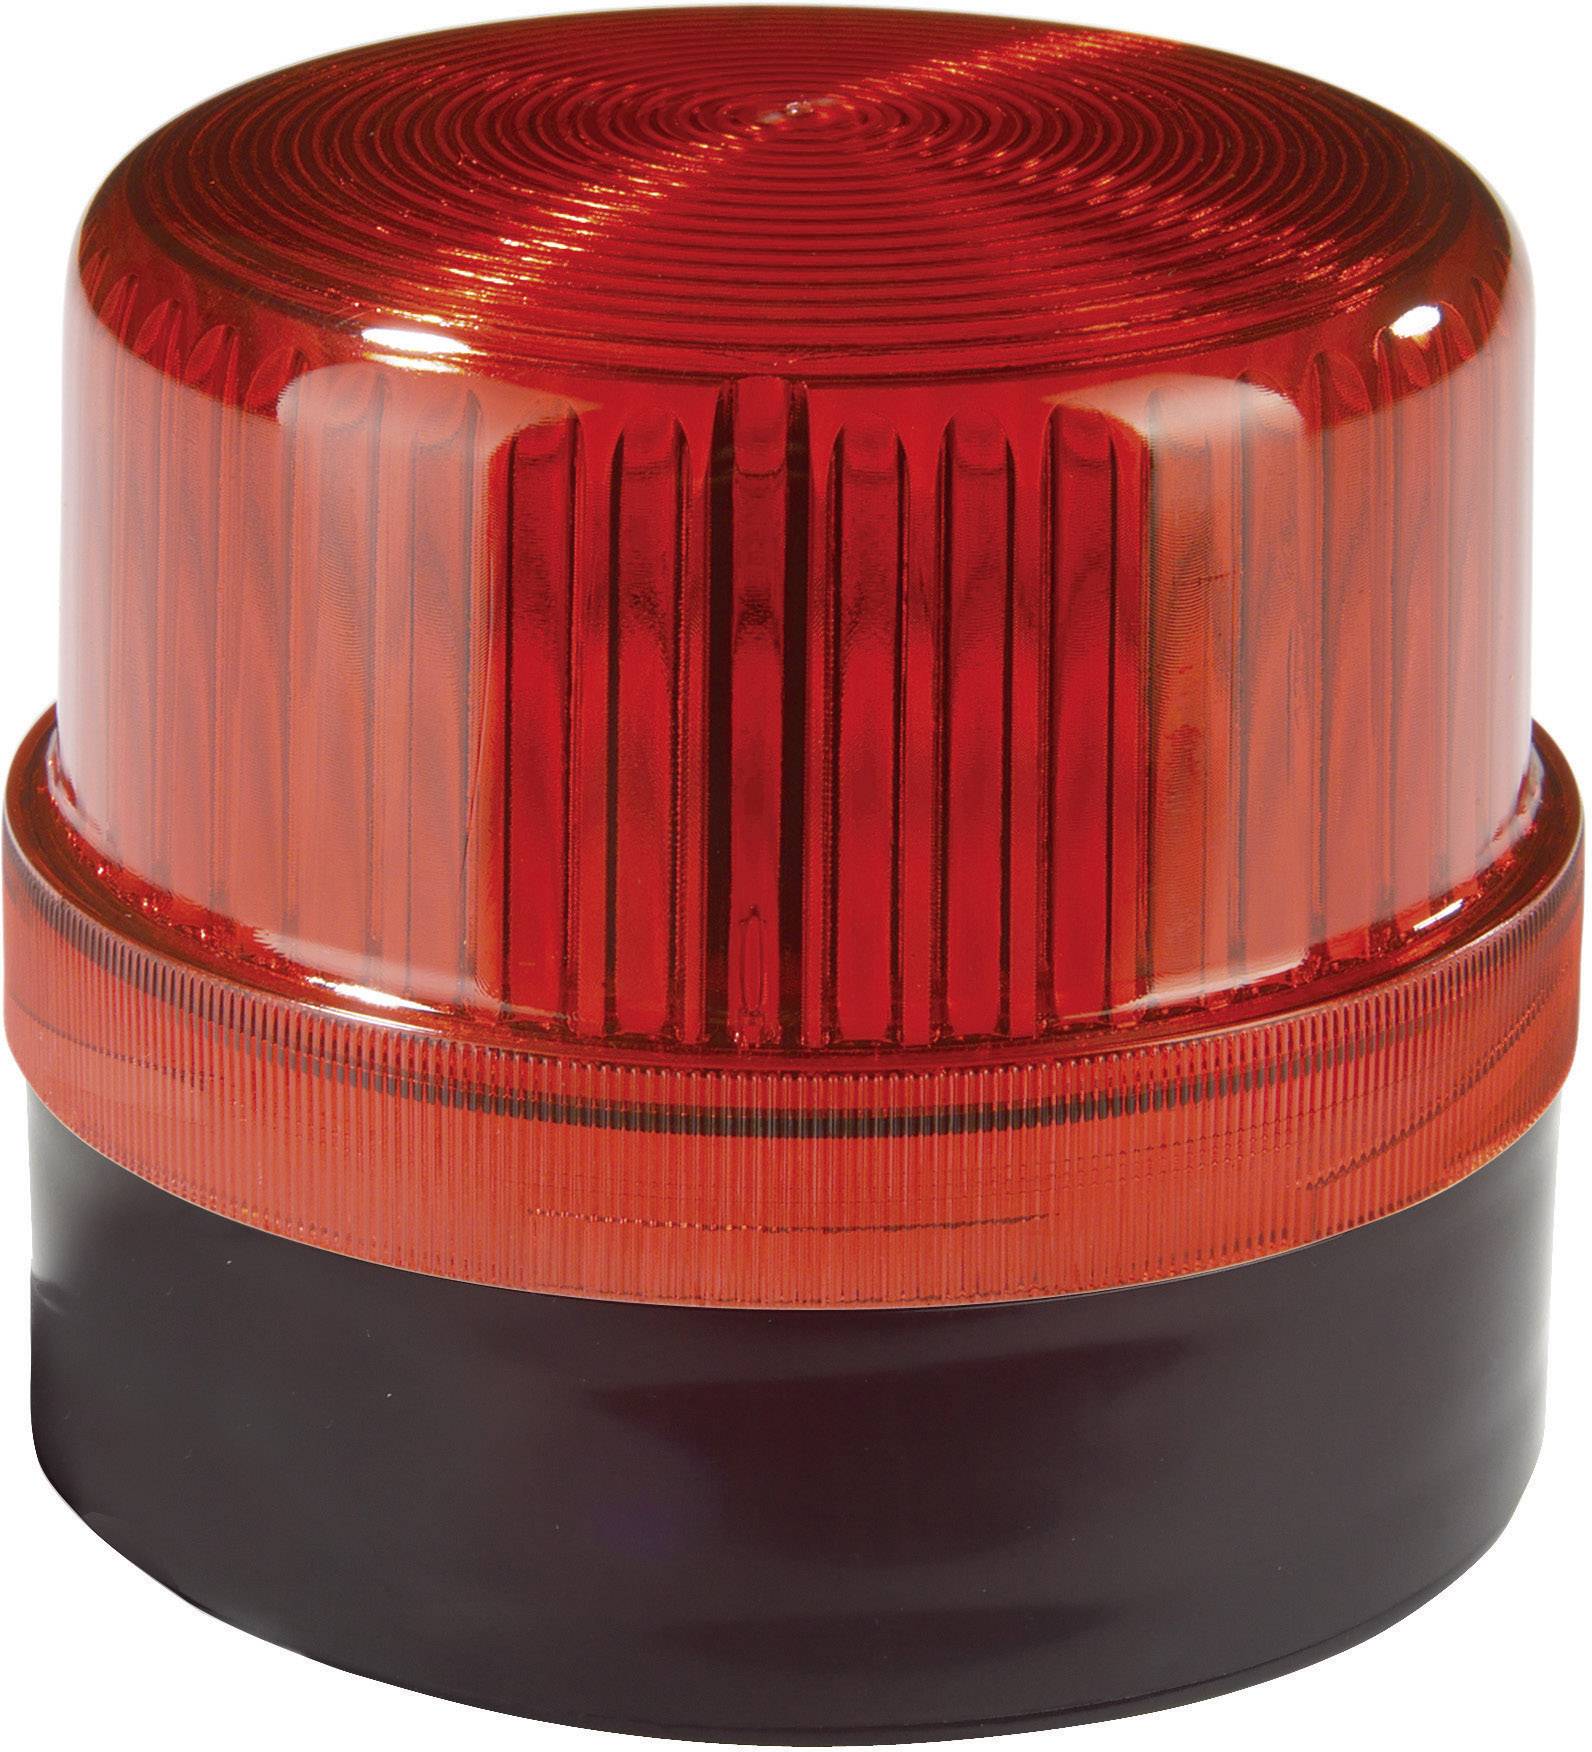 AUER SIGNAL Signalleuchte LED Auer Signalgeräte BLG Rot Rot Blinklicht 24 V/DC, 24 V/AC